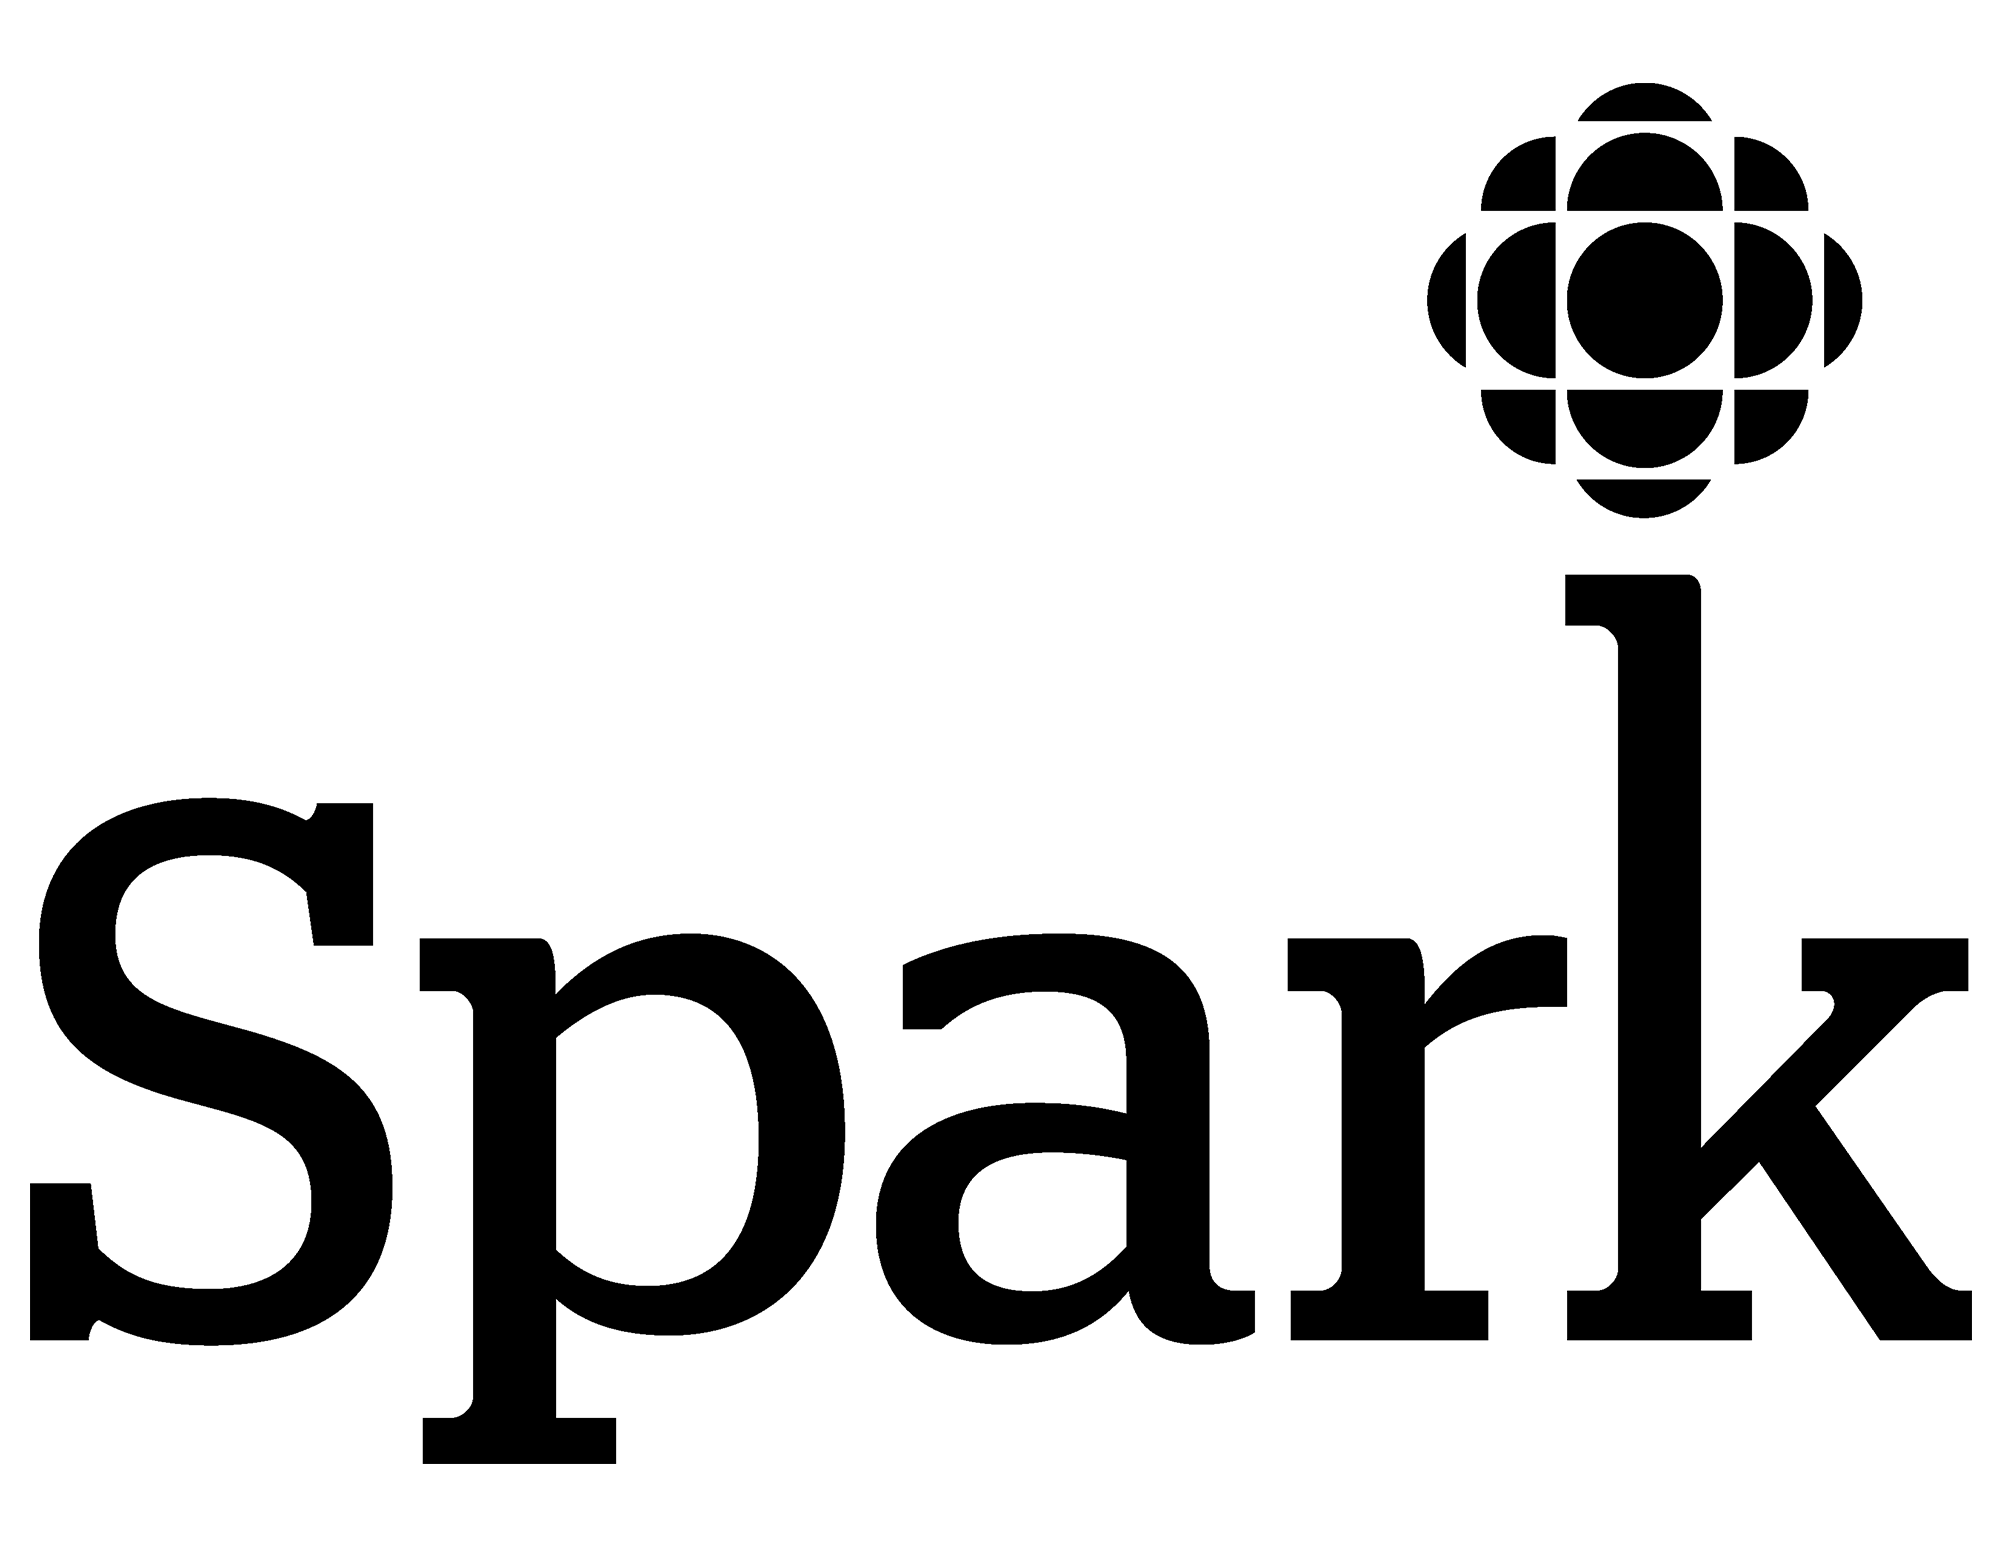 Spark logo black